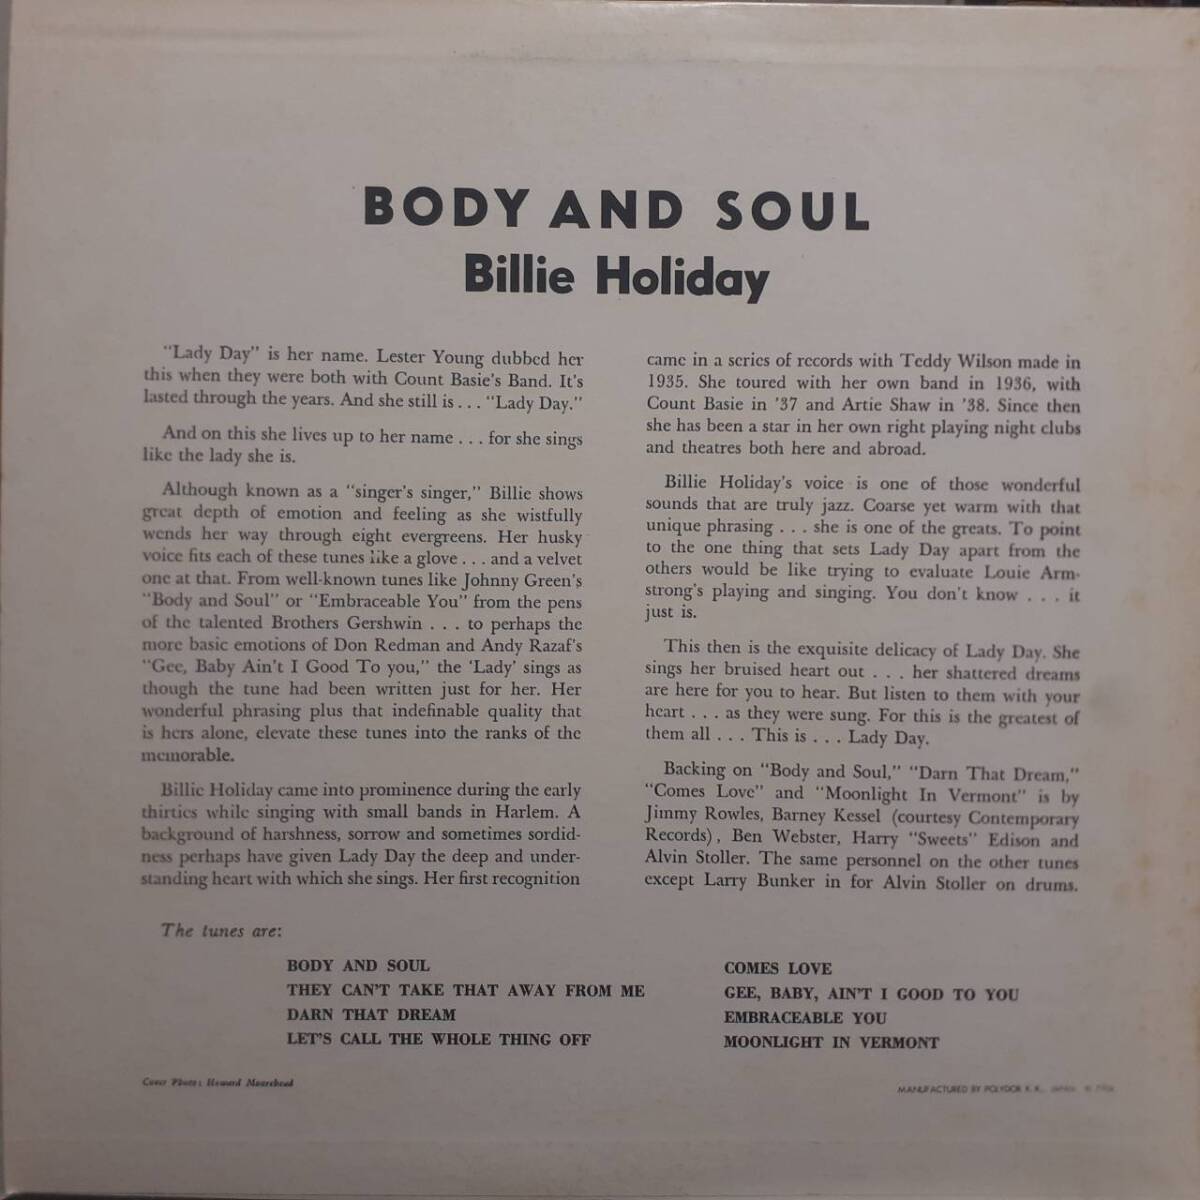 PROMO日本VERVE盤LP 見本盤 白ラベル MONO盤 Billie Holiday / Body And Soul 1977年 MV 2597 高音質SAL74 ビリー・ホリデイ Barney Kessel_画像3